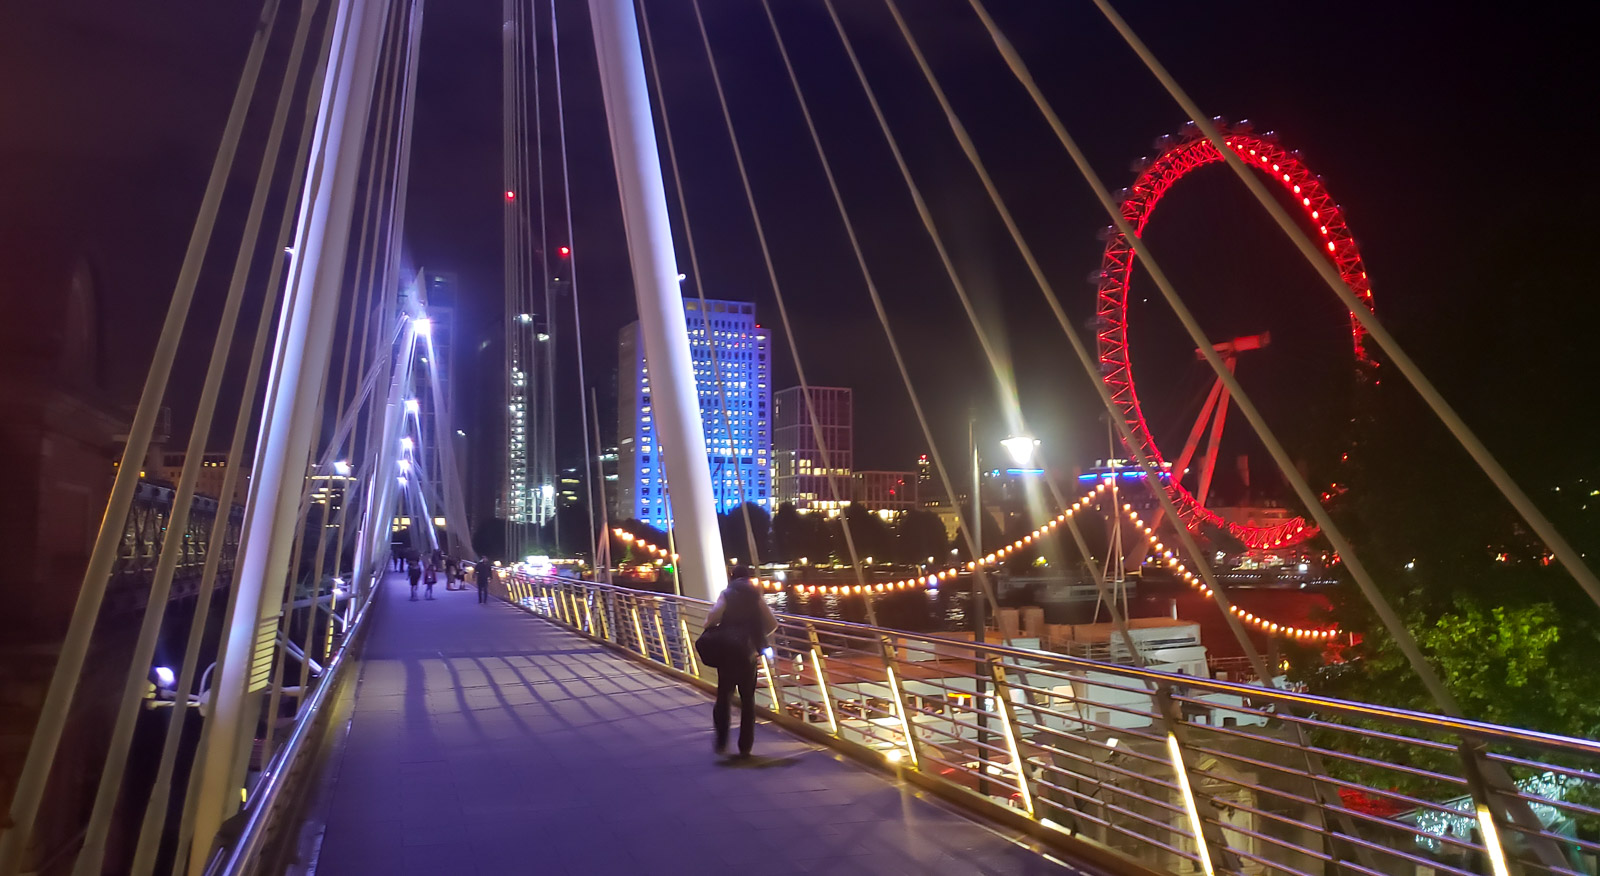 Crossing the Golden Jubilee Bridge in London at night.